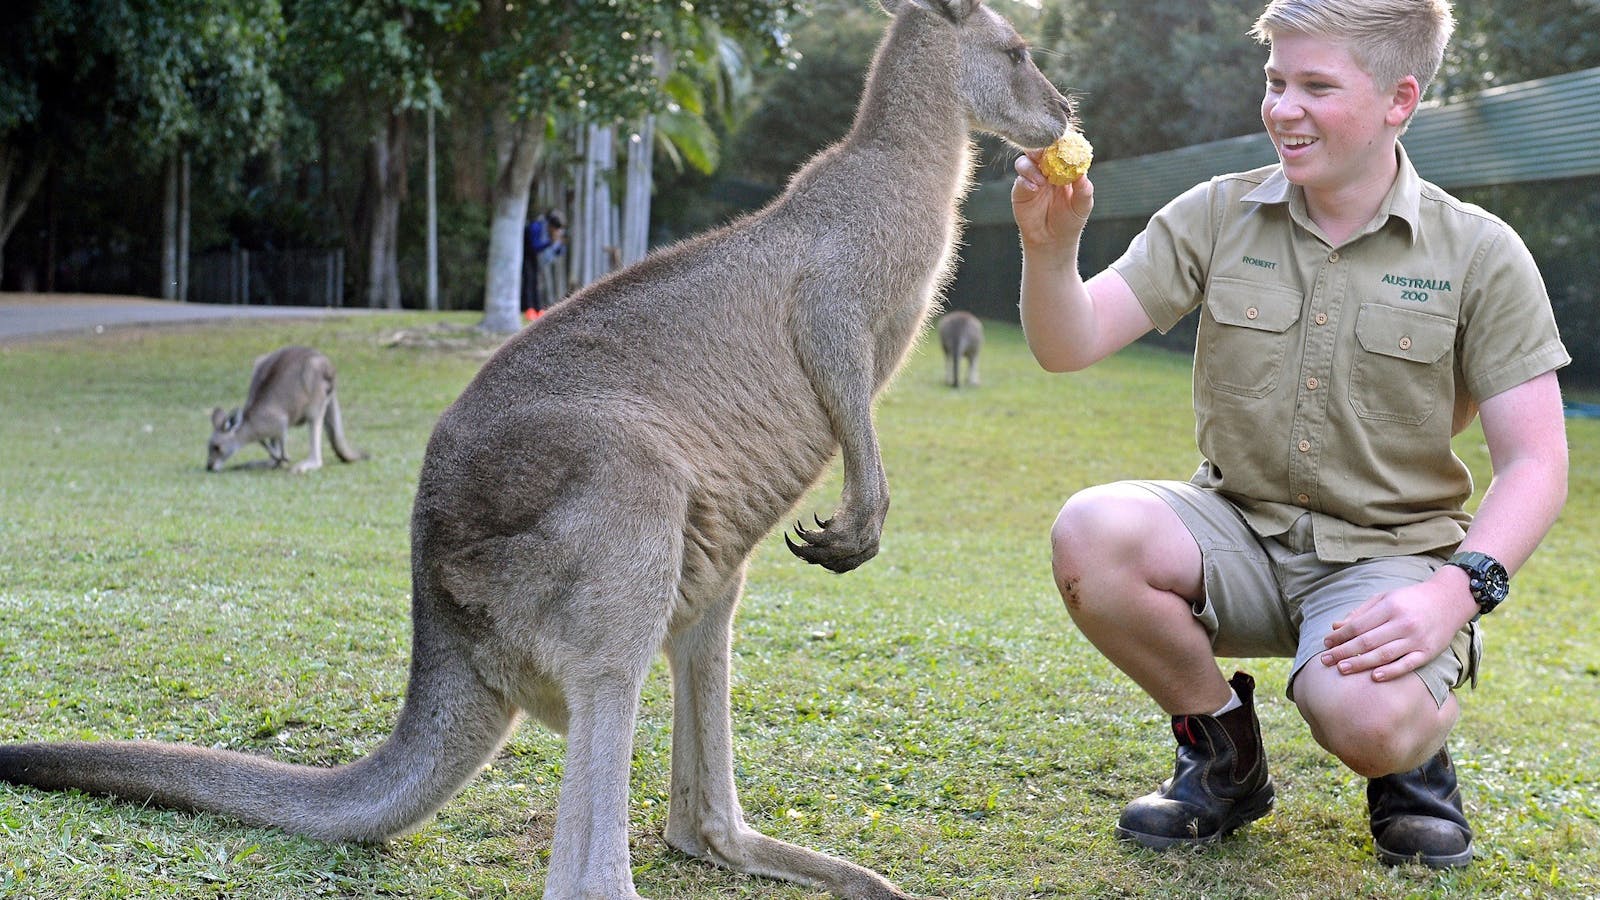 Robert Irwin with a kangaroo at Australia Zoo